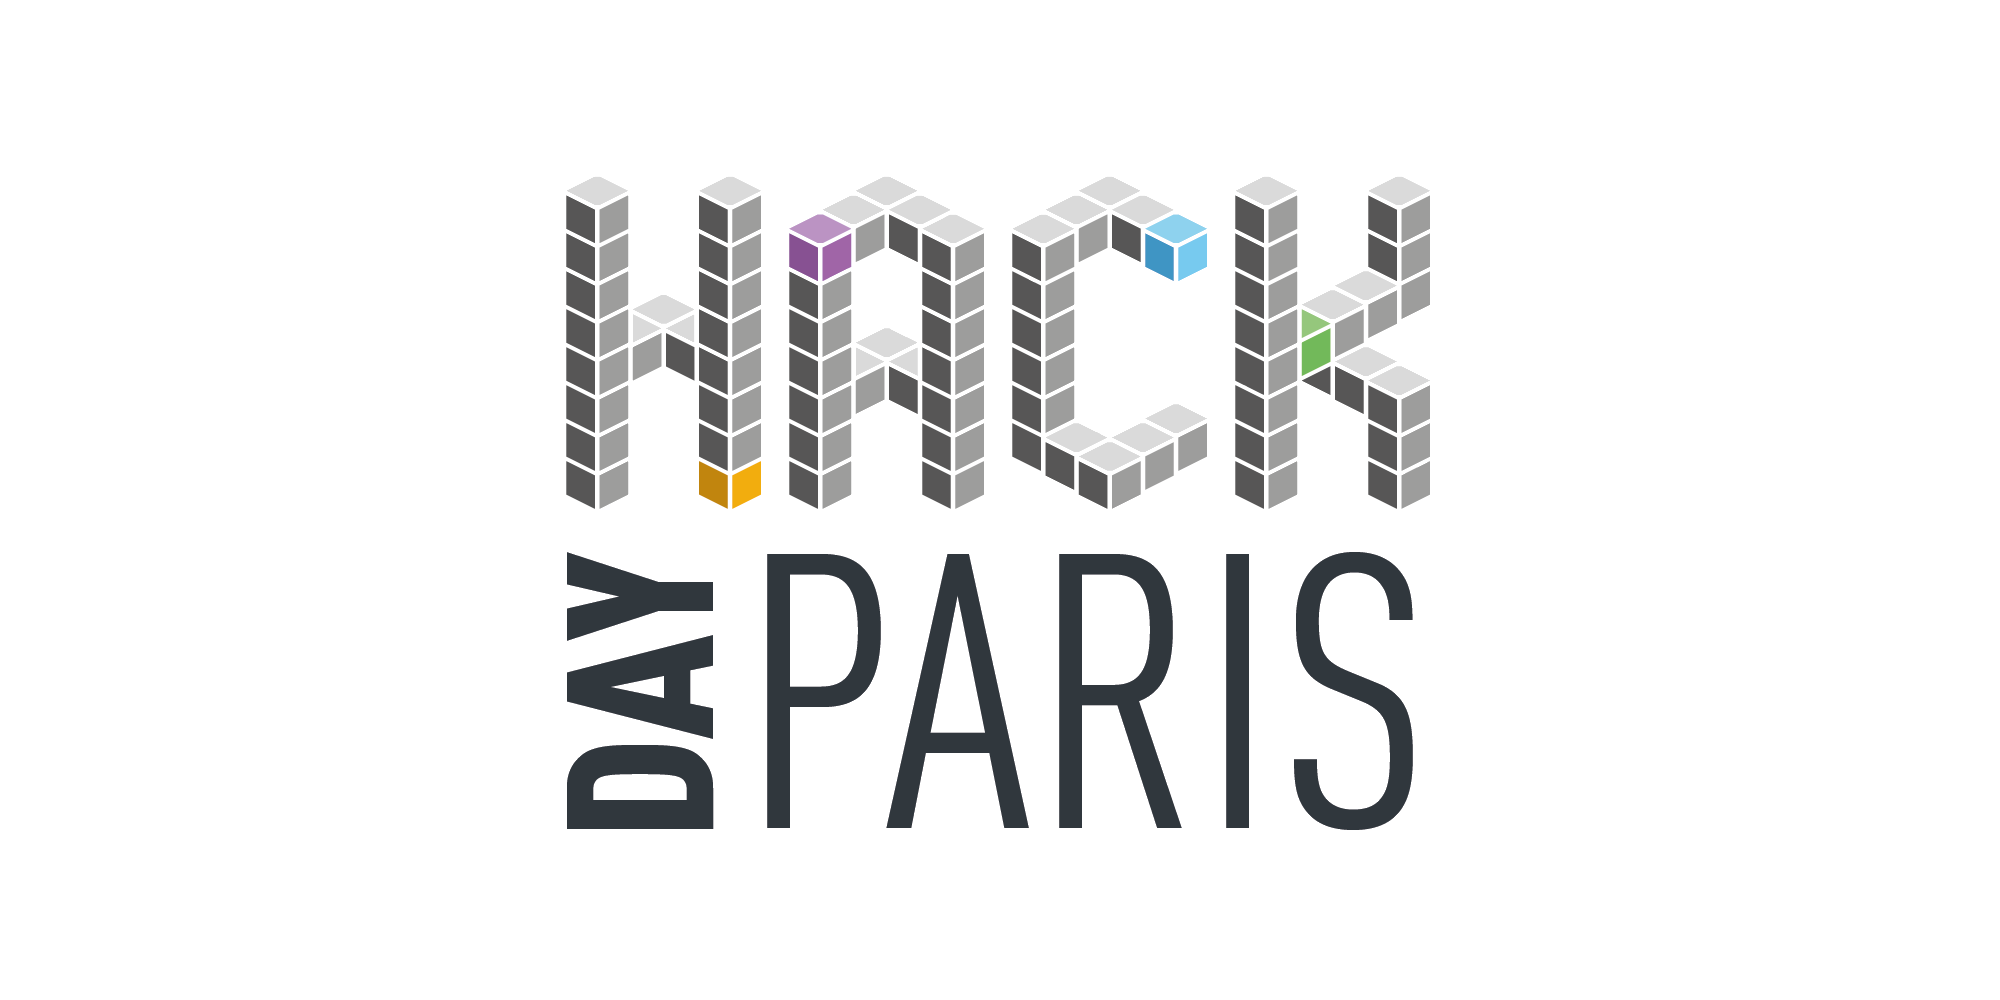 Hack Day Paris picture